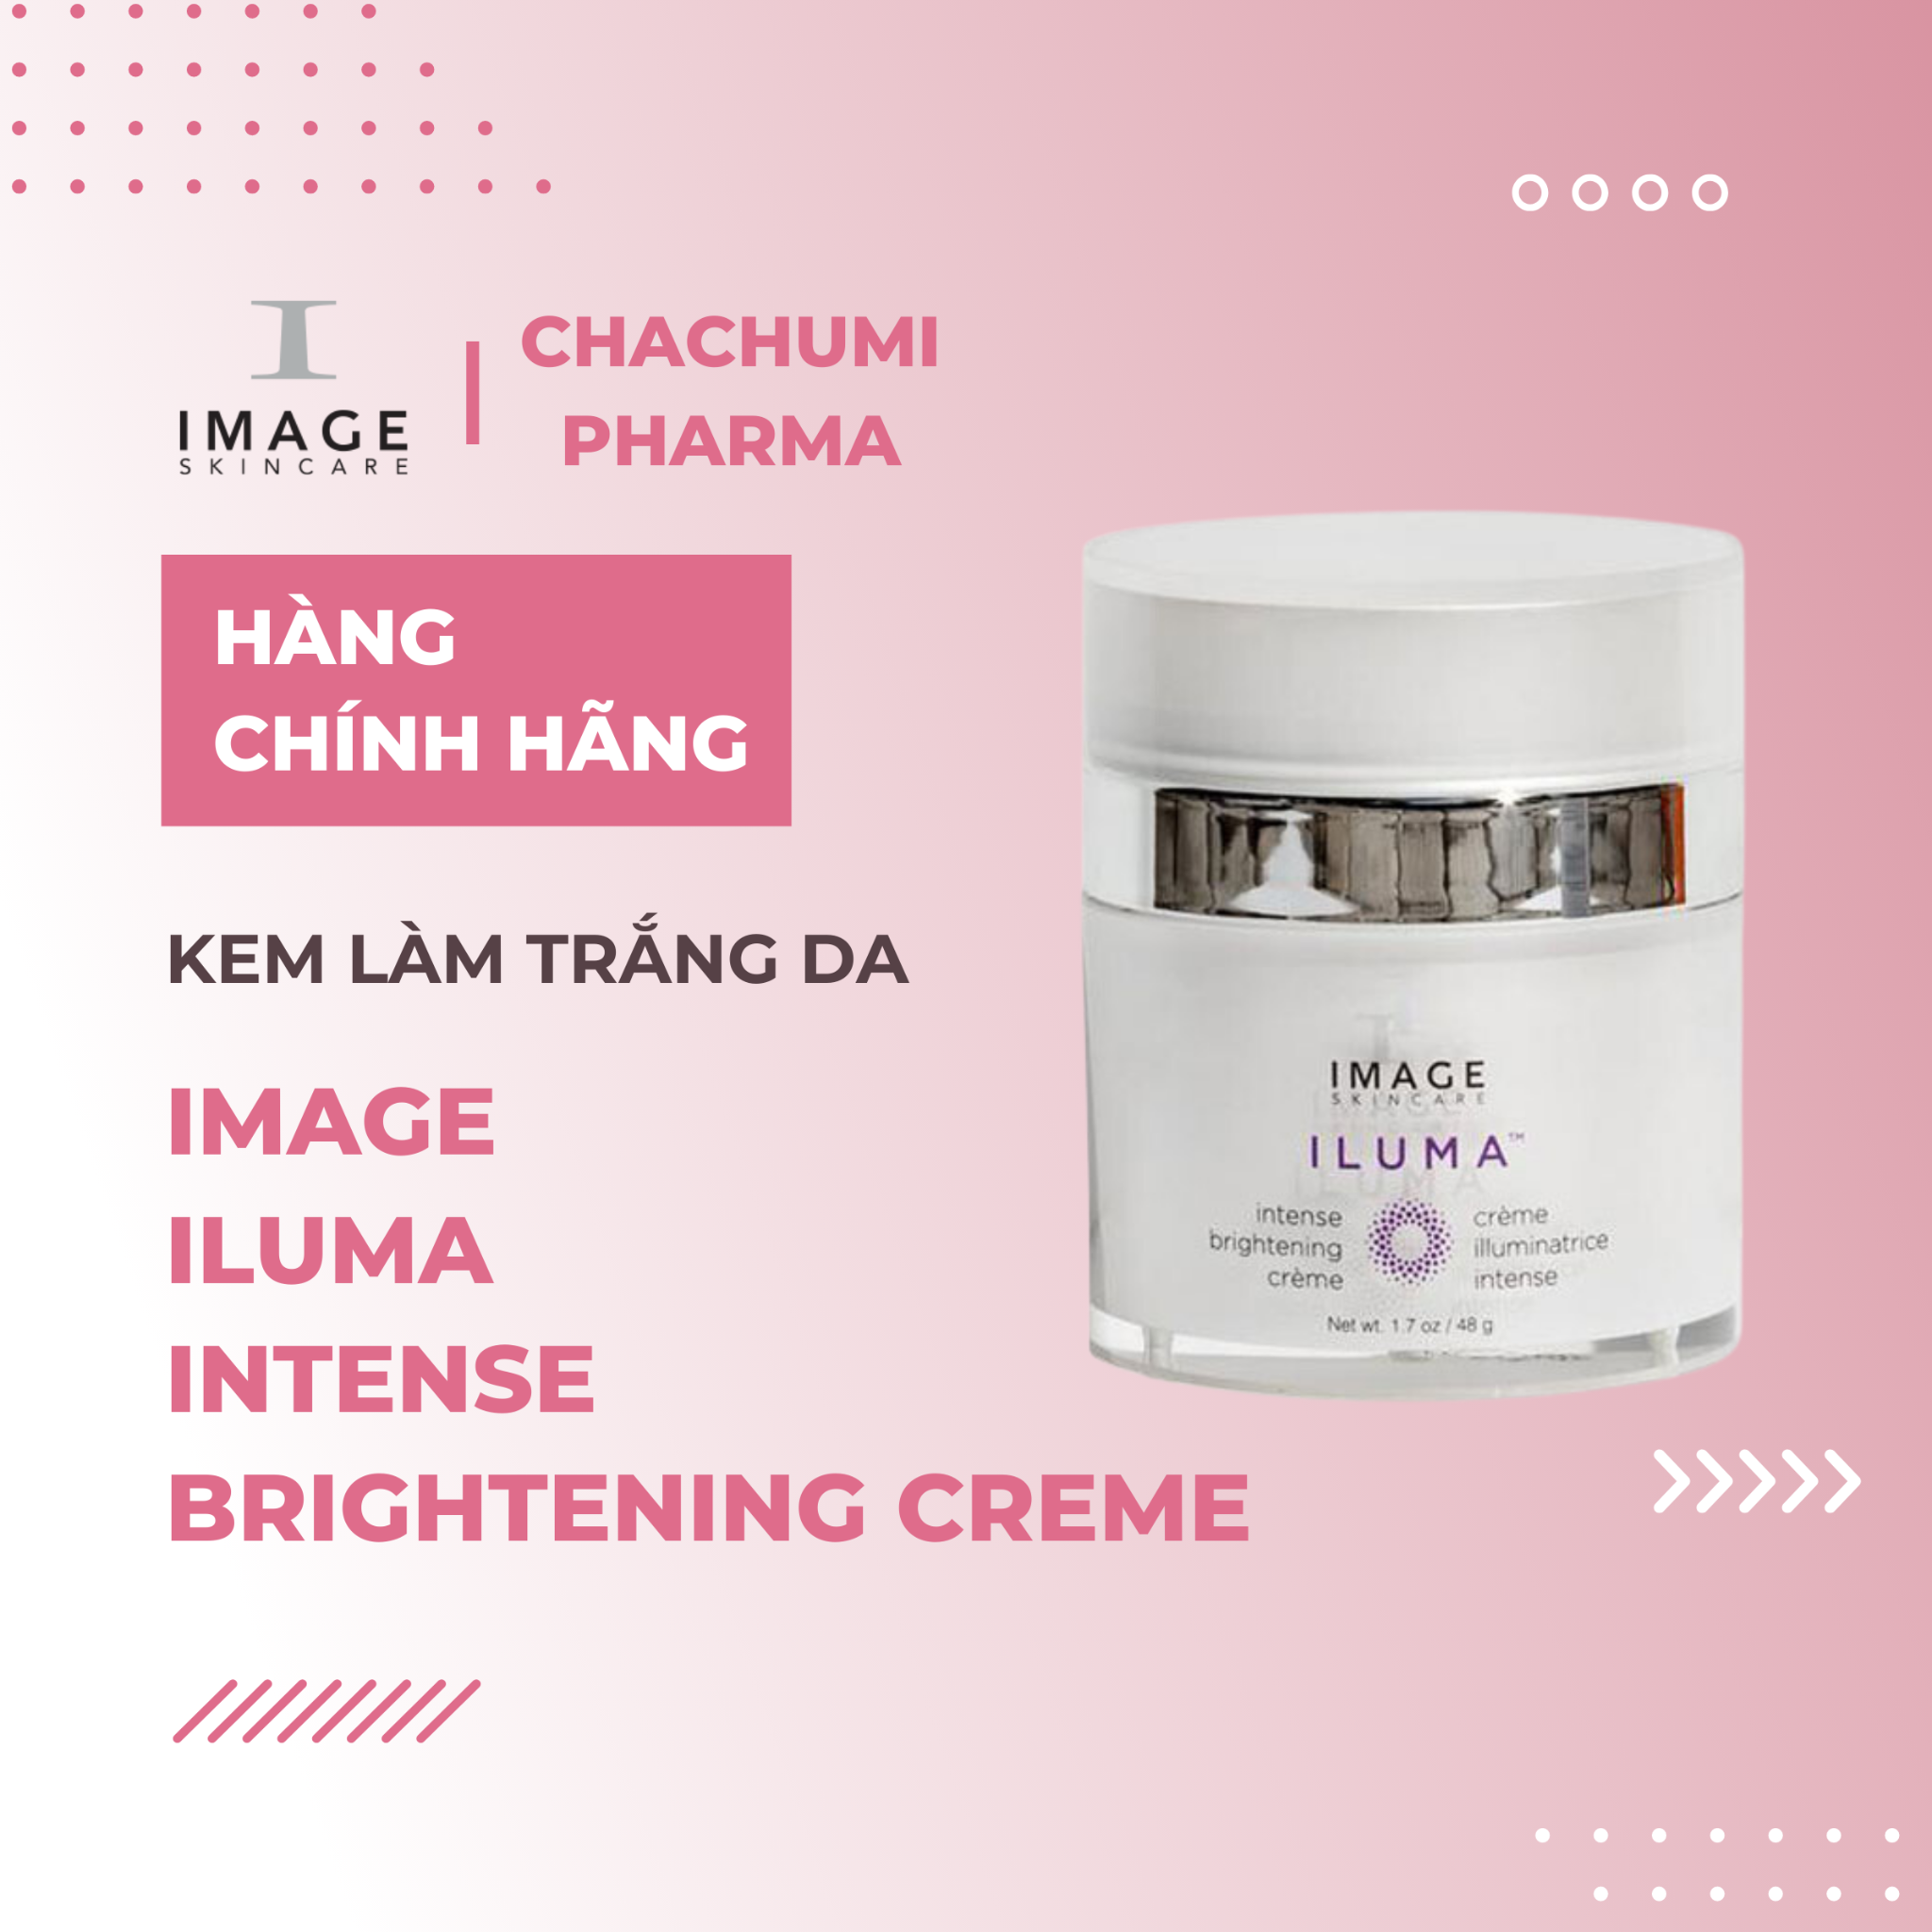 Image Skincare Iluma Intense Brightening Creme – Kem làm trắng da